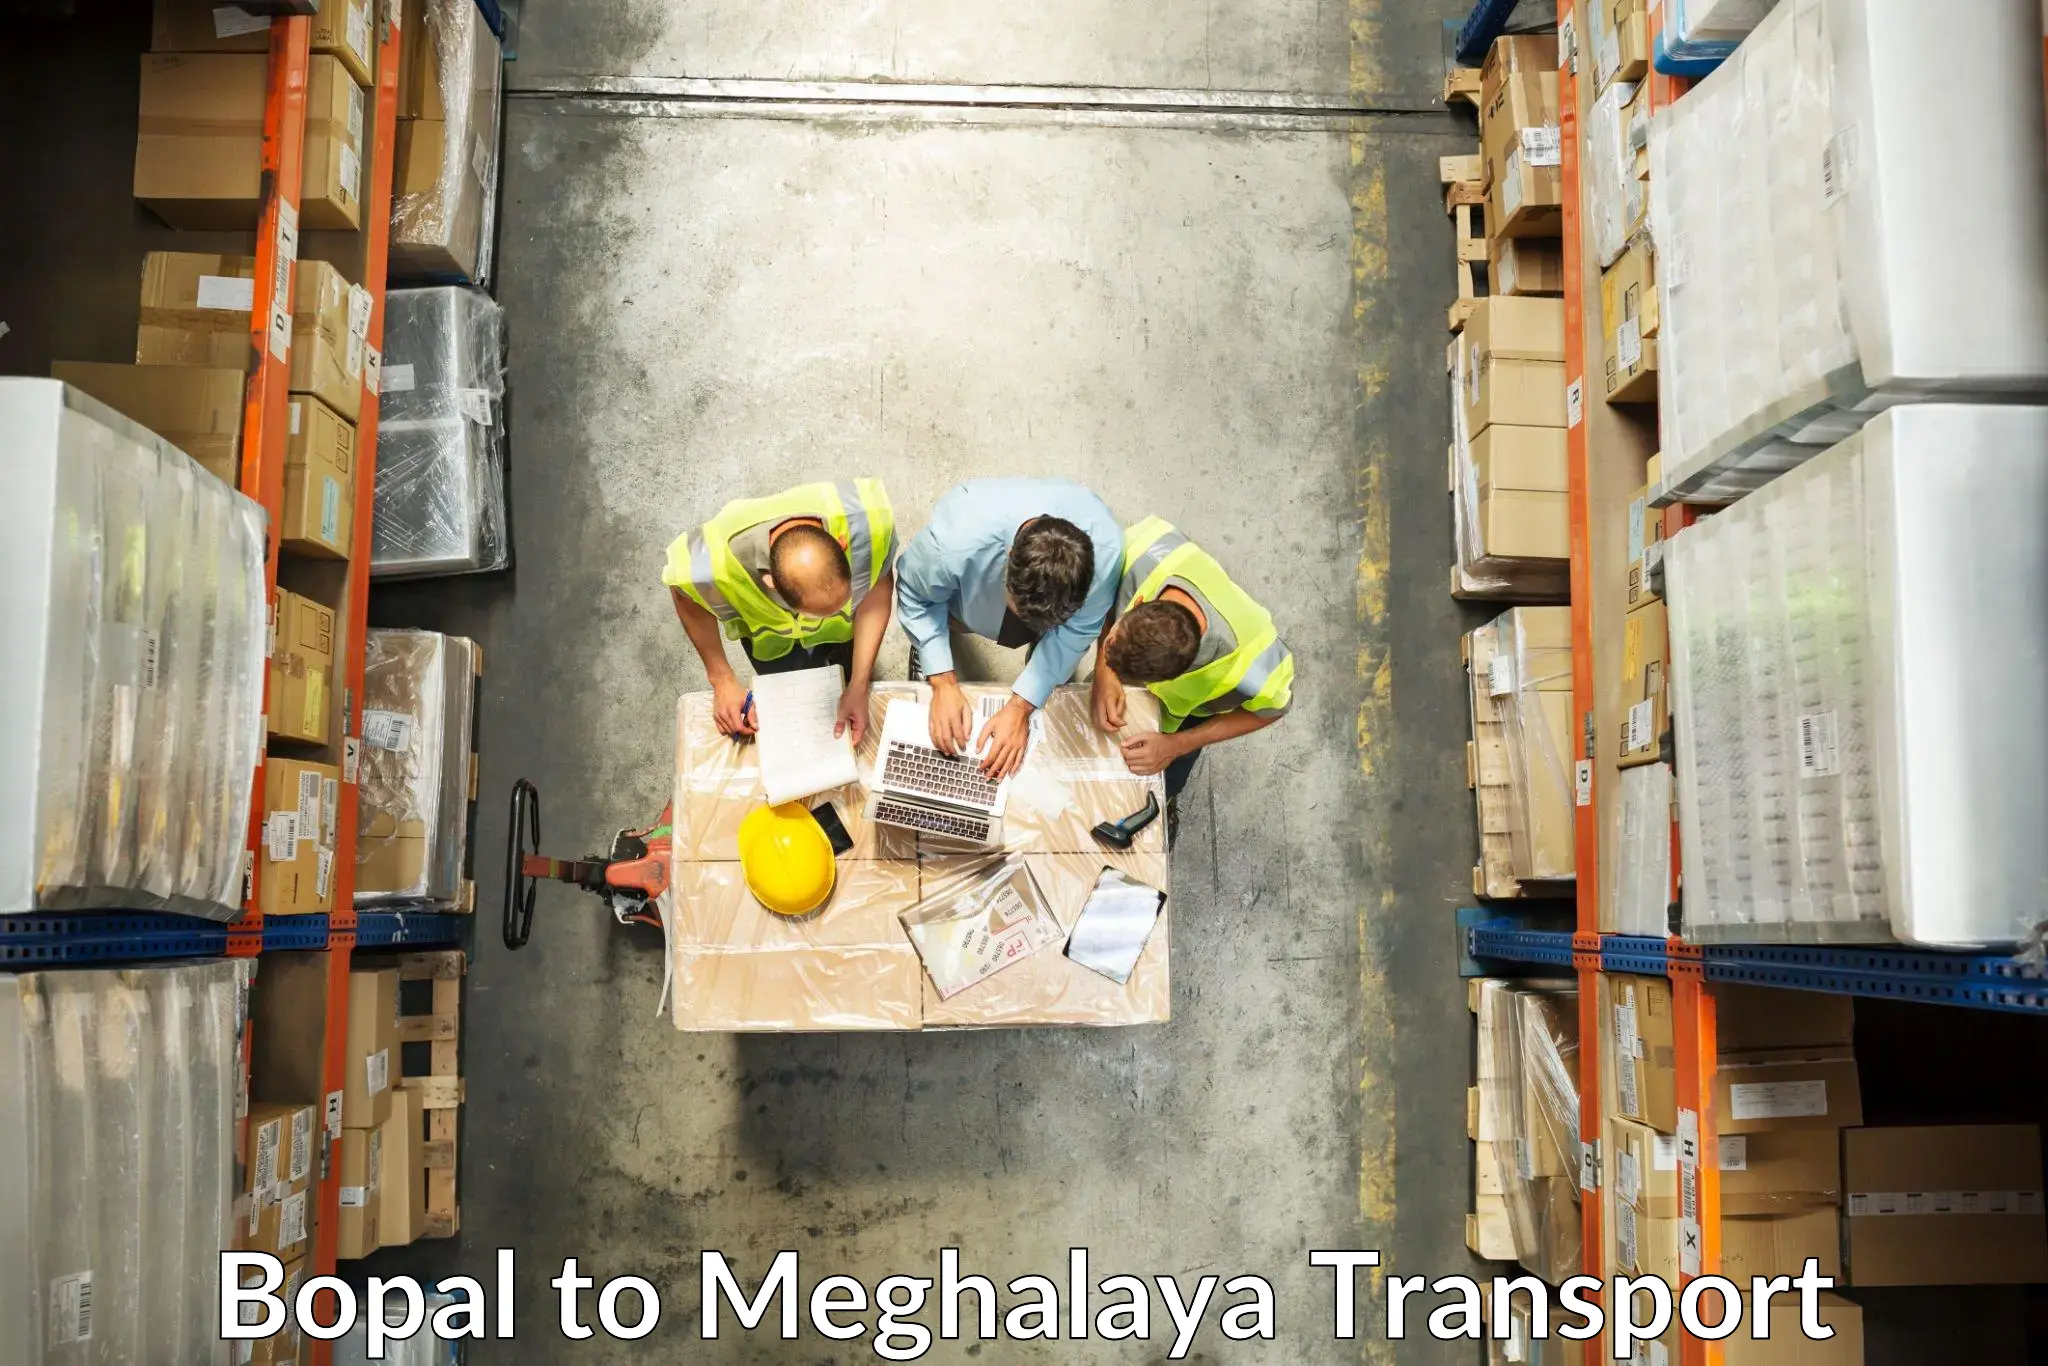 Truck transport companies in India Bopal to Meghalaya